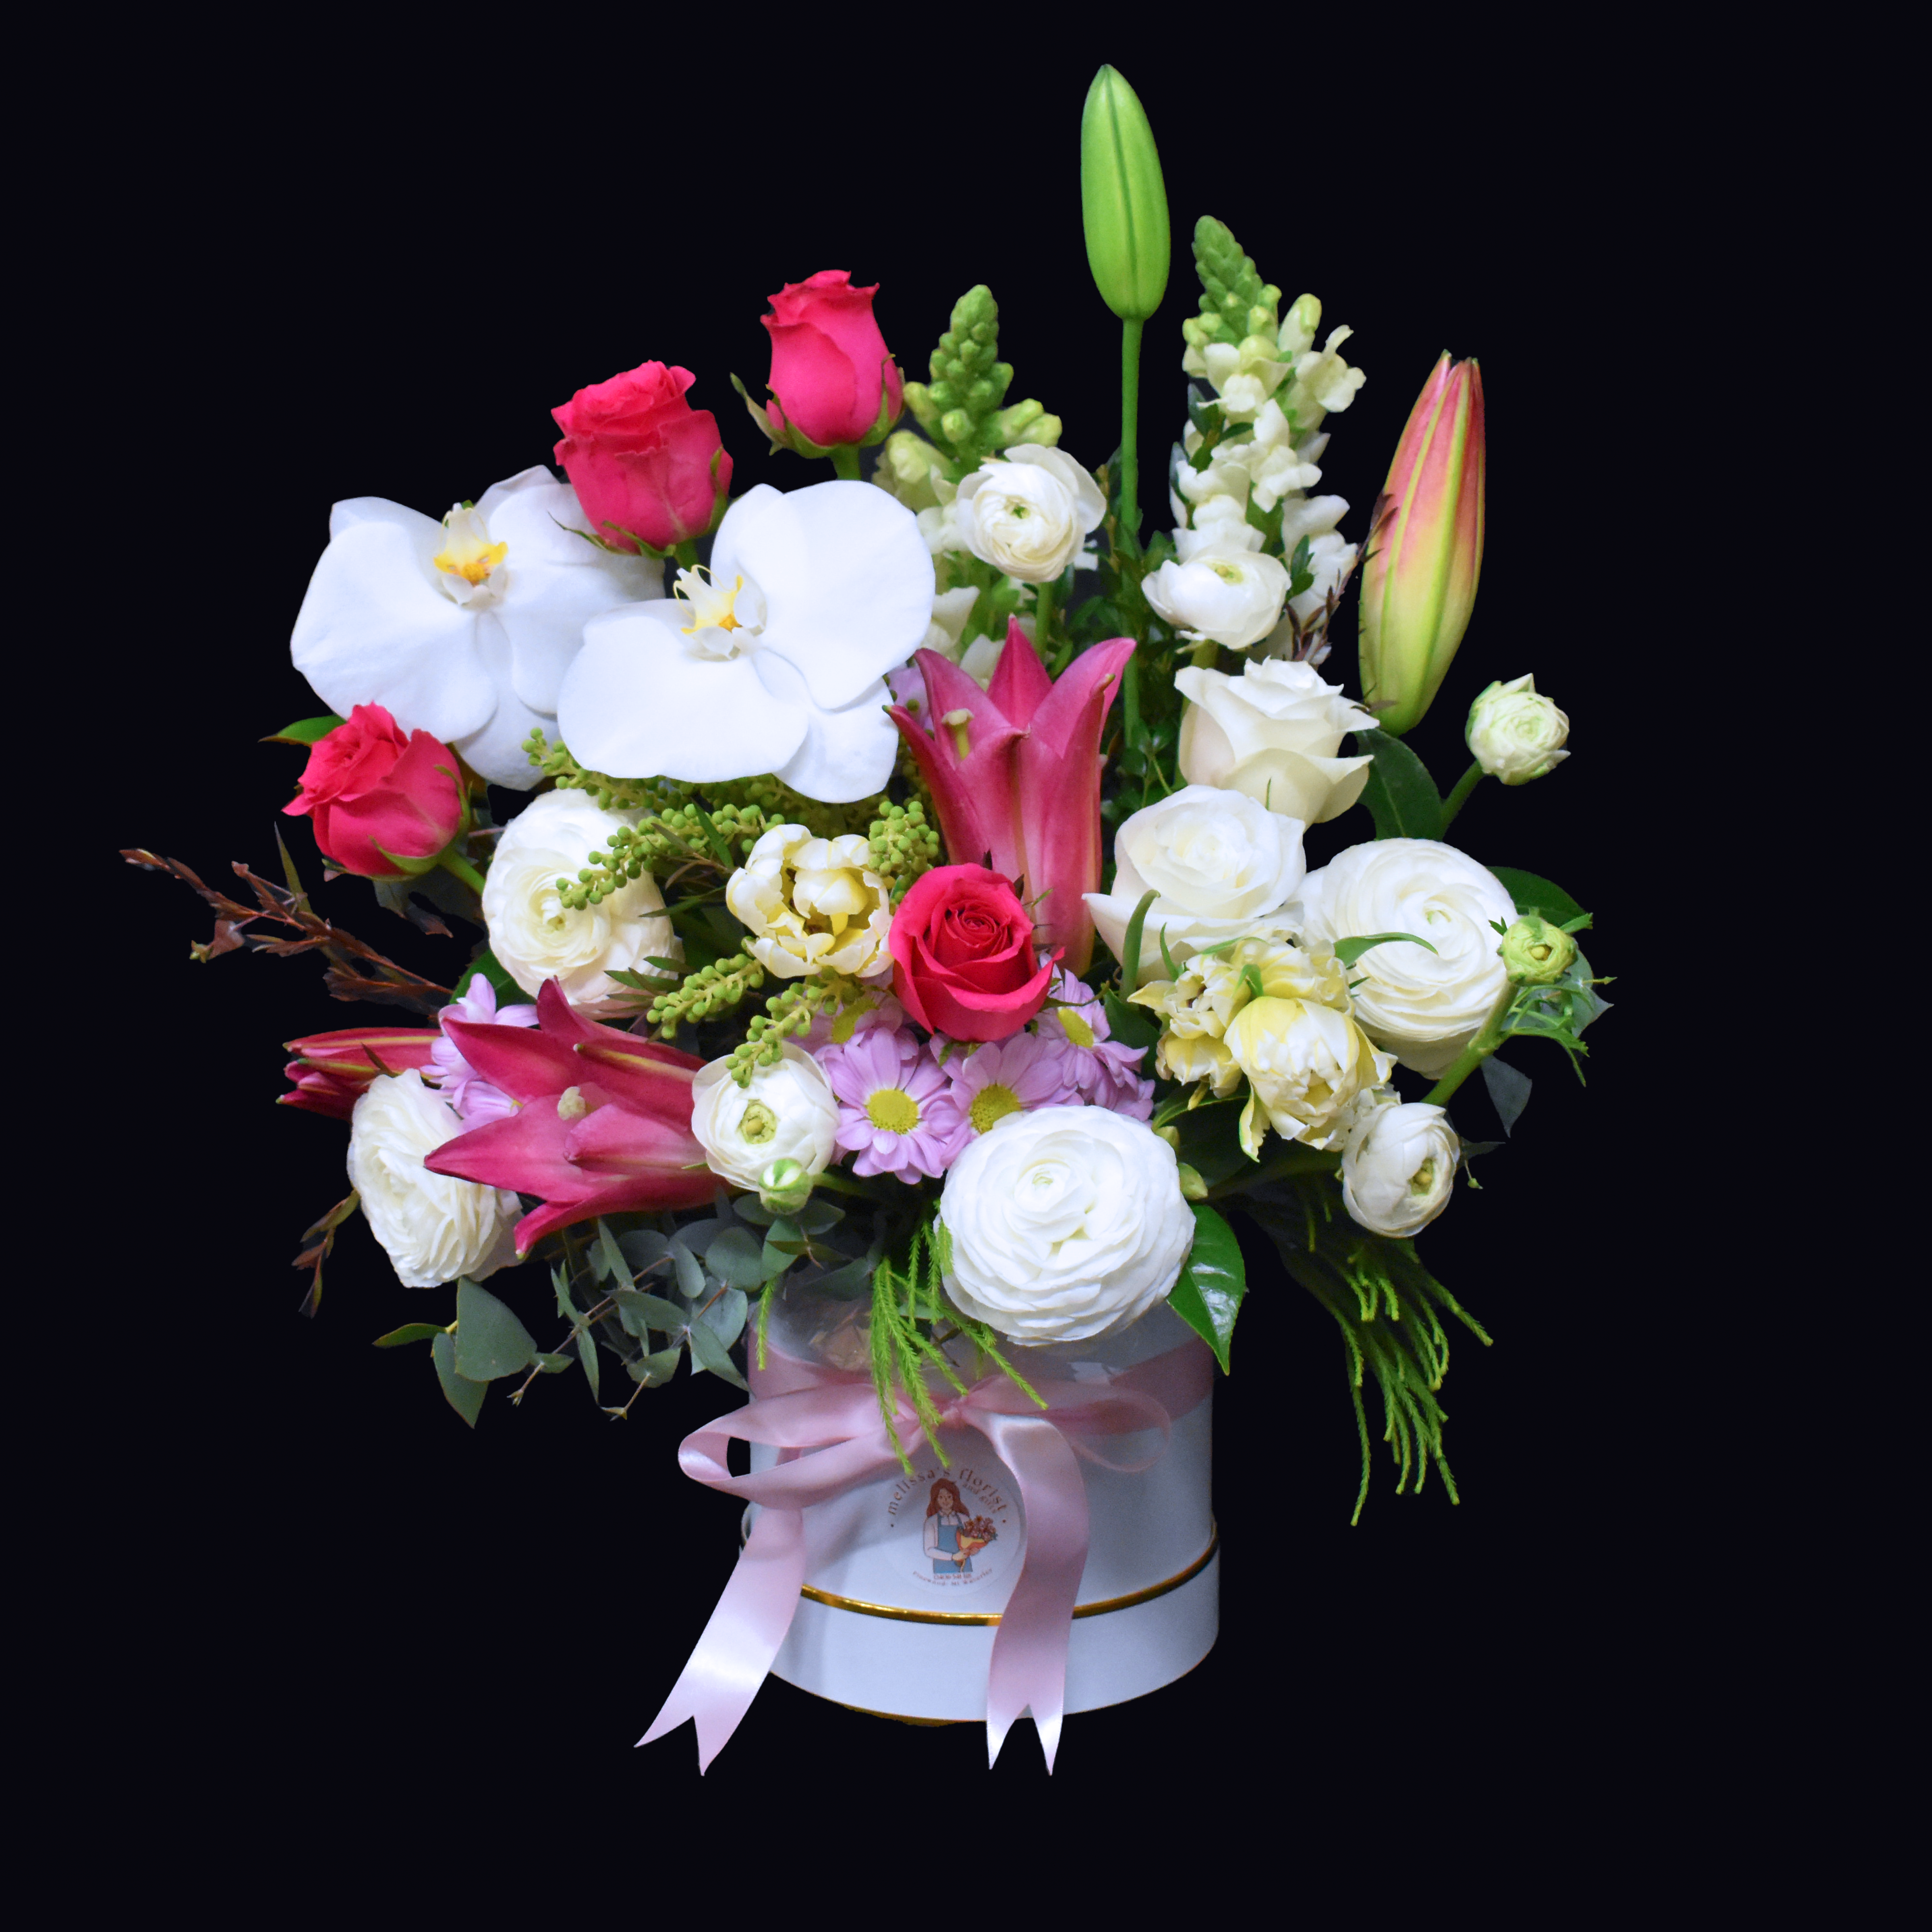 White Red-Pink Flowers Hatbox (Premium)